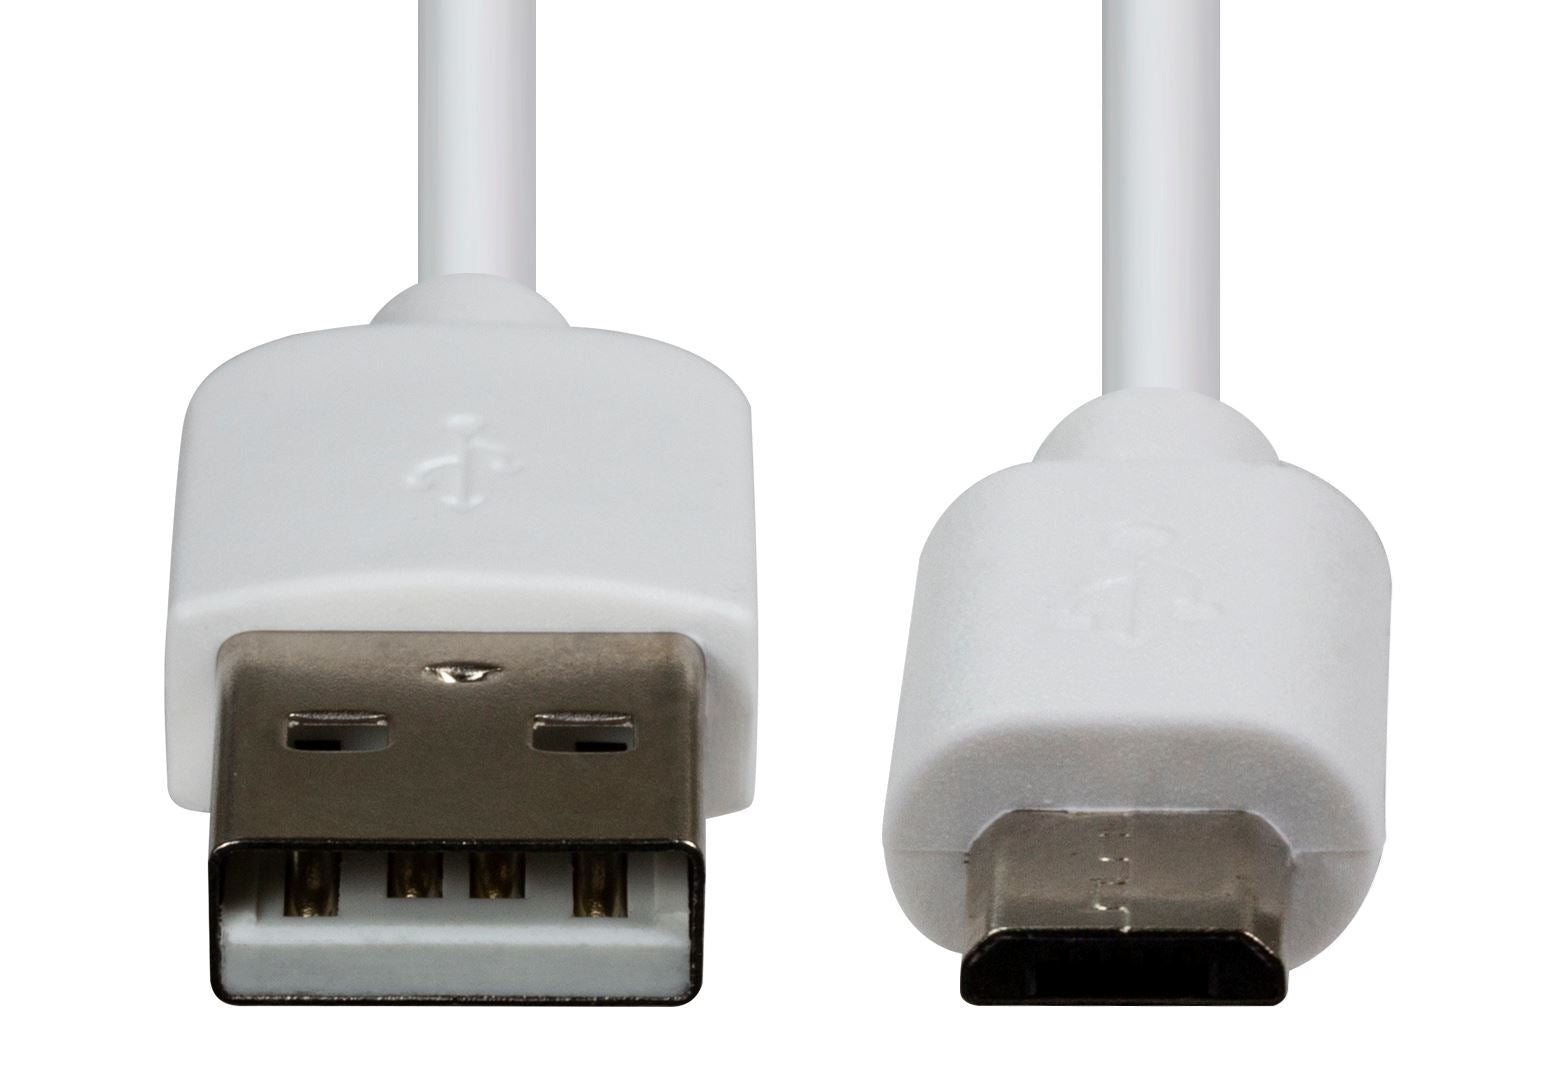 DYNAMIX_5m_USB_2.0_Micro-B_Male_to_USB-A_Male_Connectors._Colour_White. 1124